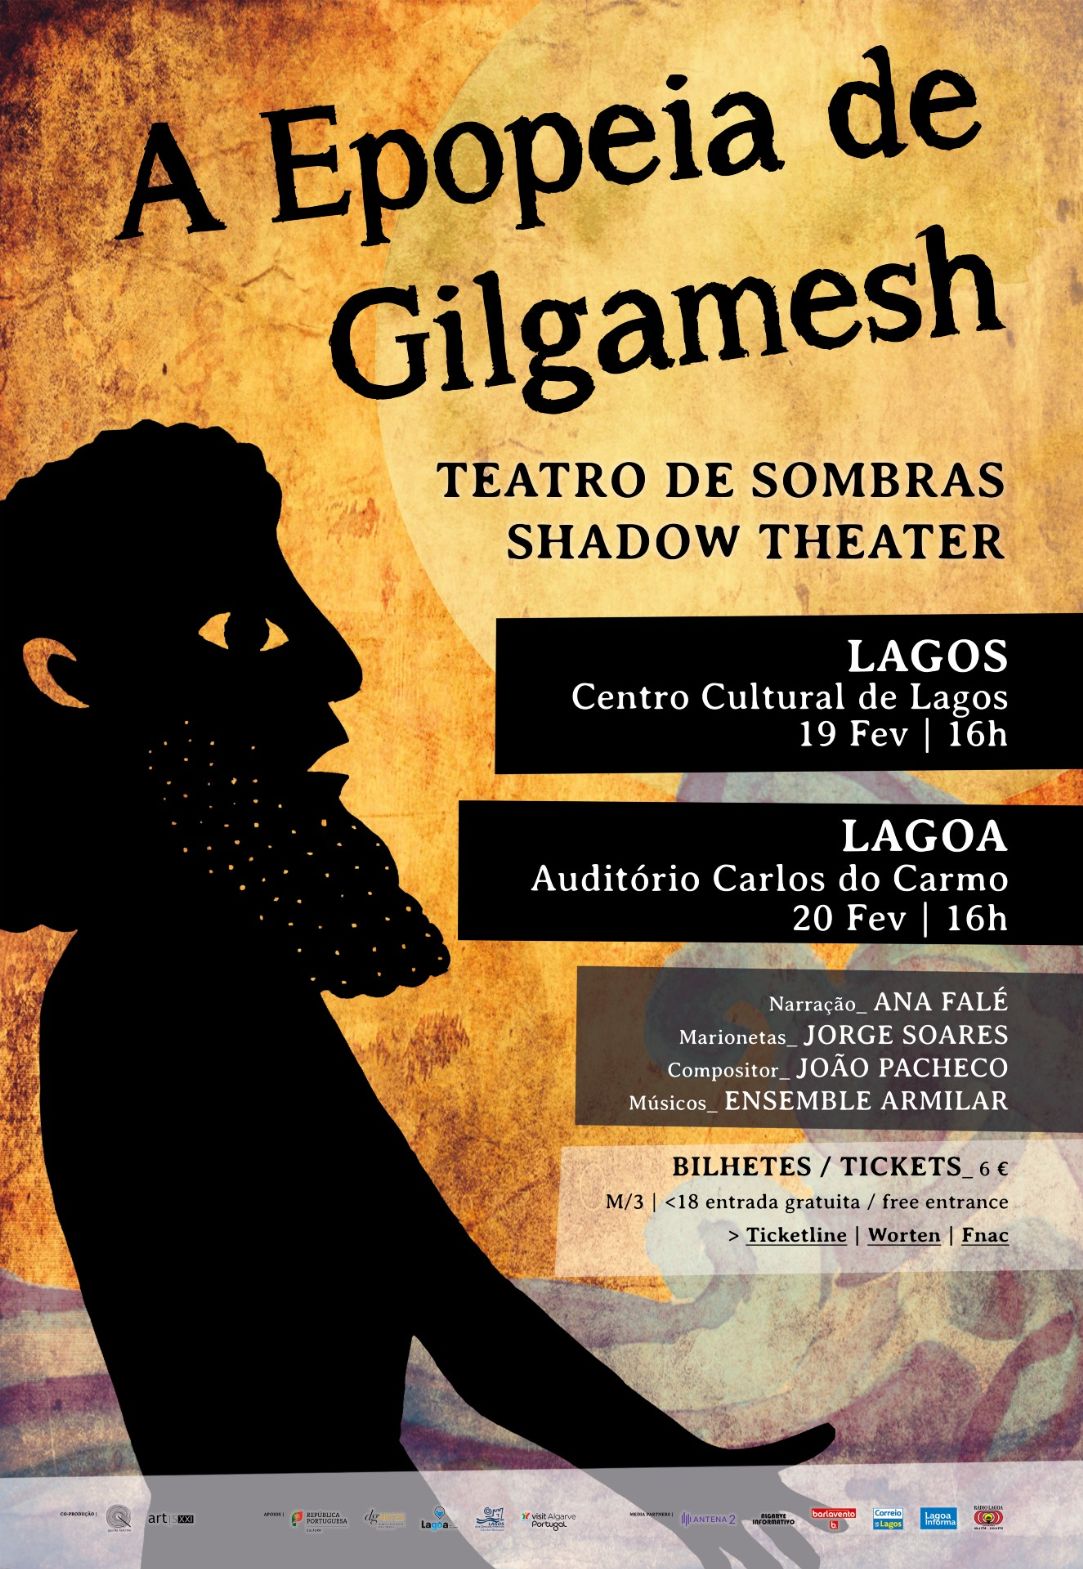 A Epopeia de Gilgamesh, Teatro de Marionetas de Sombras sobe ao palco em Lagoa e Lagos